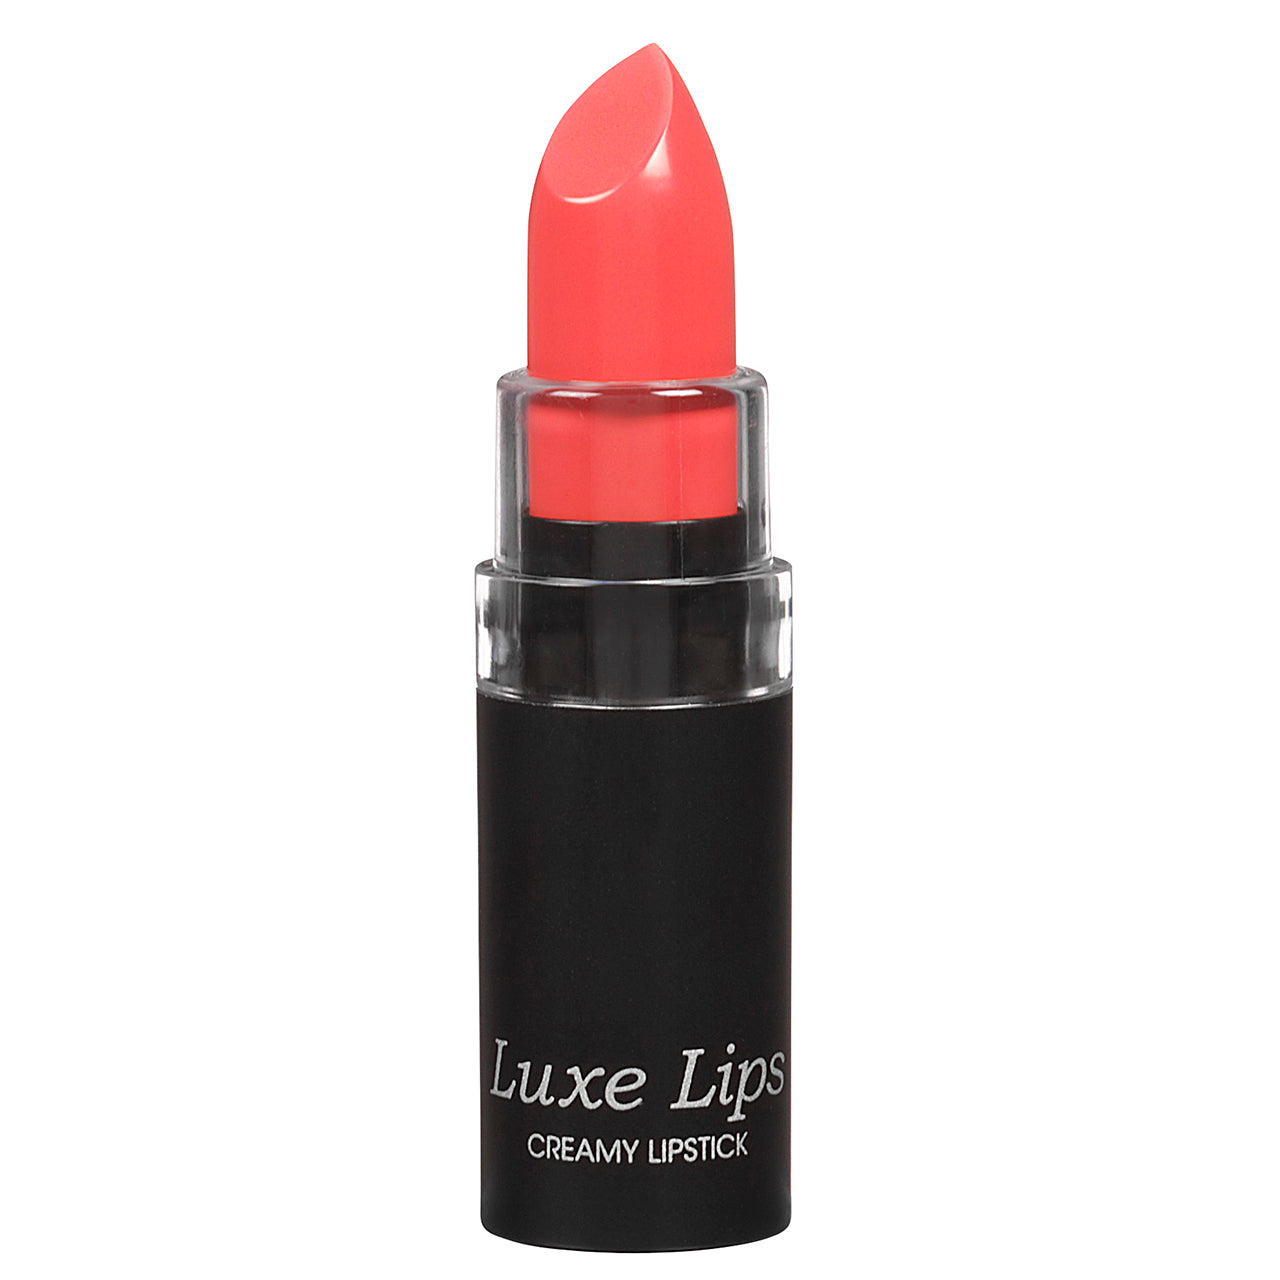 Styli-Style Cosmetics Luxe Lips Creamy Lipstick - Electric Orange - ADDROS.COM